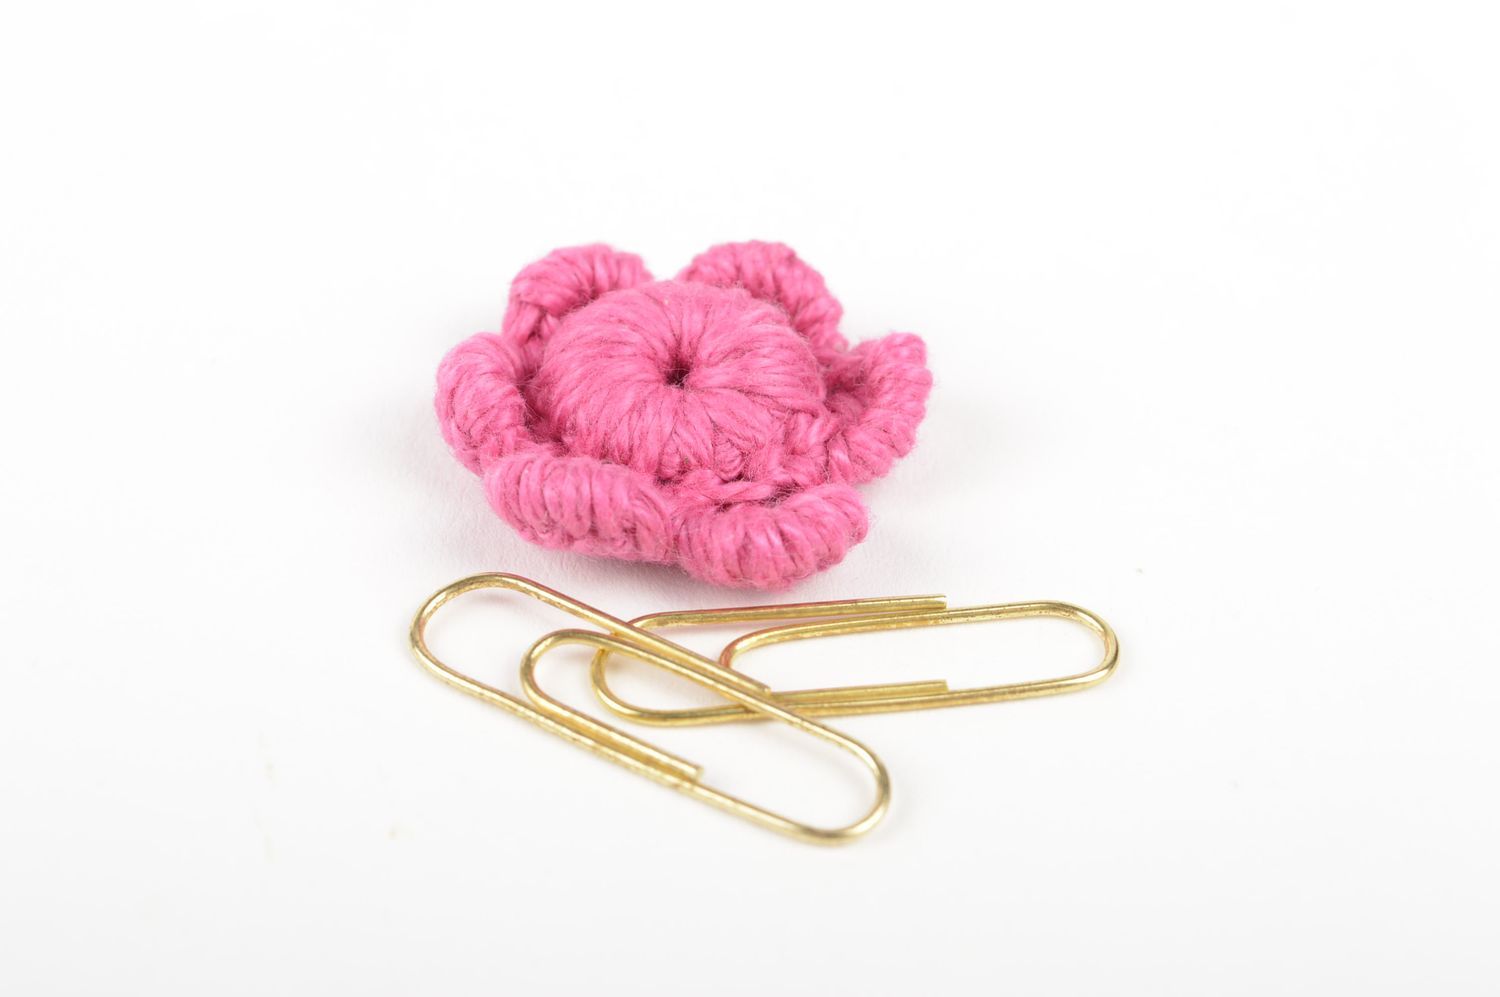 Handmade stylish brooch unusual crocheted fittings unusual jewelry blank photo 5